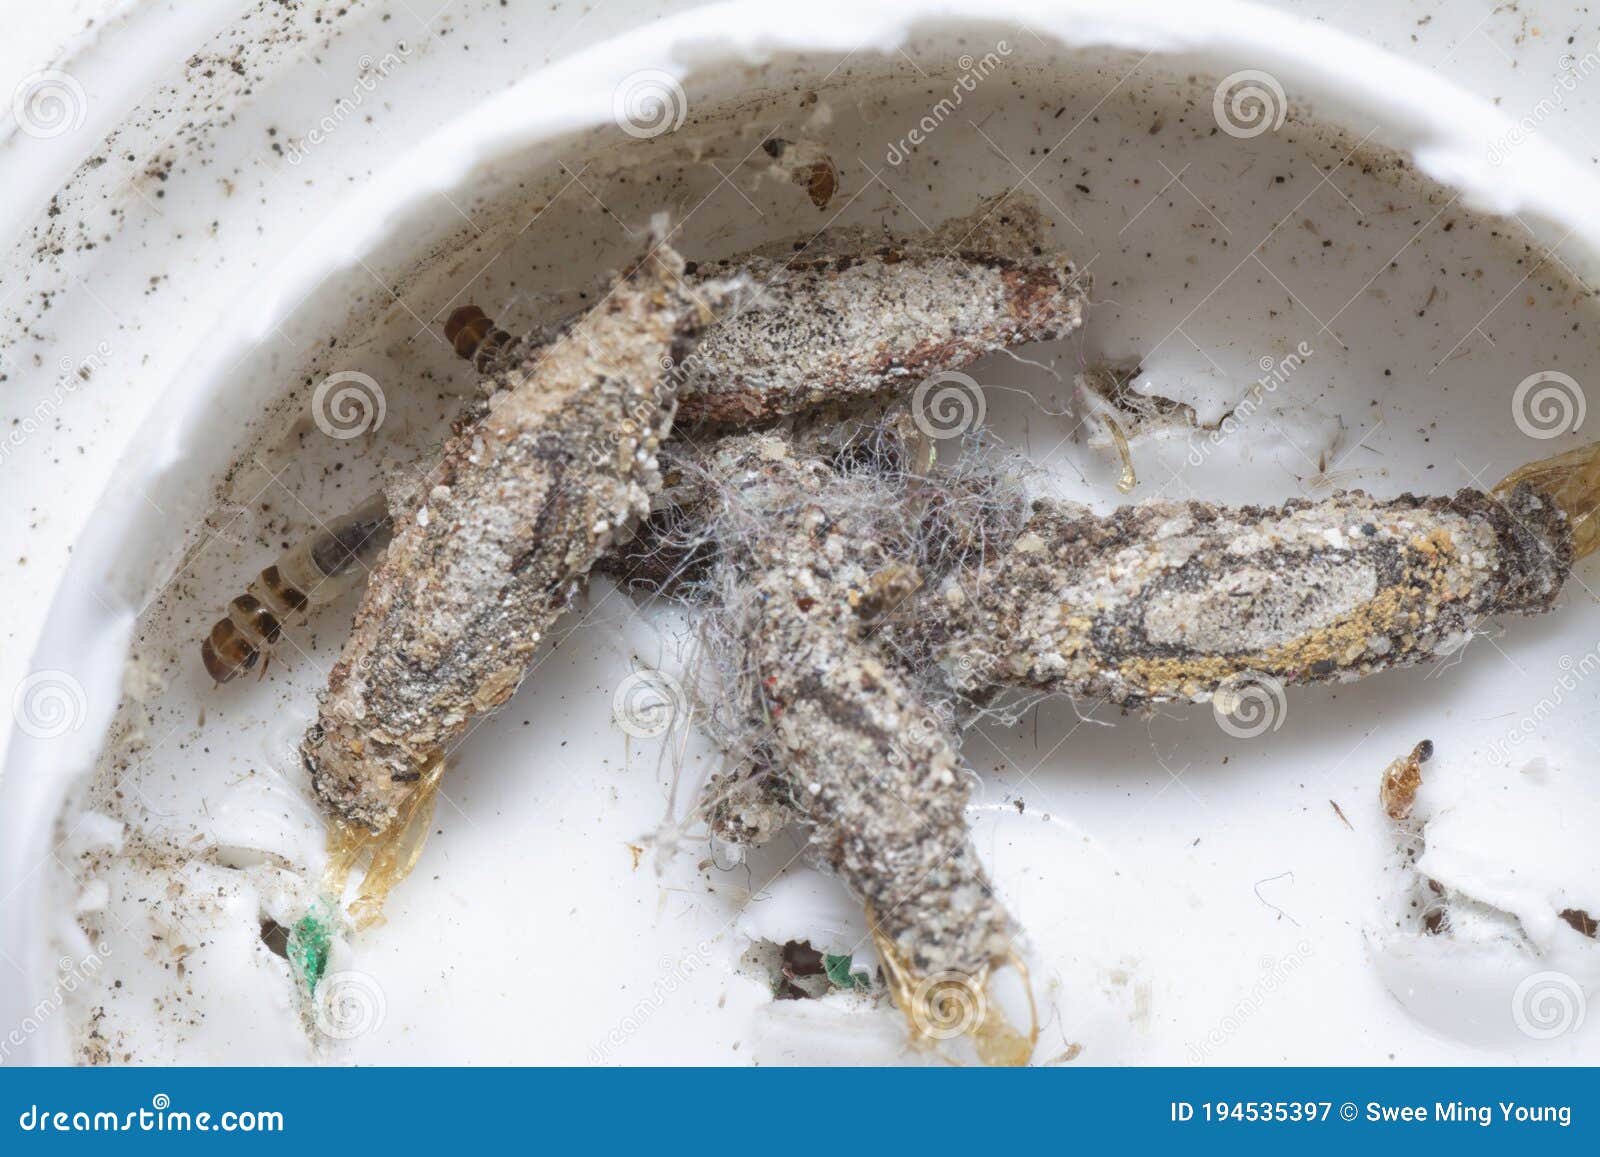 Close Shot of the Tinea Pellionella Larvae Stock Image - Image of macro ...